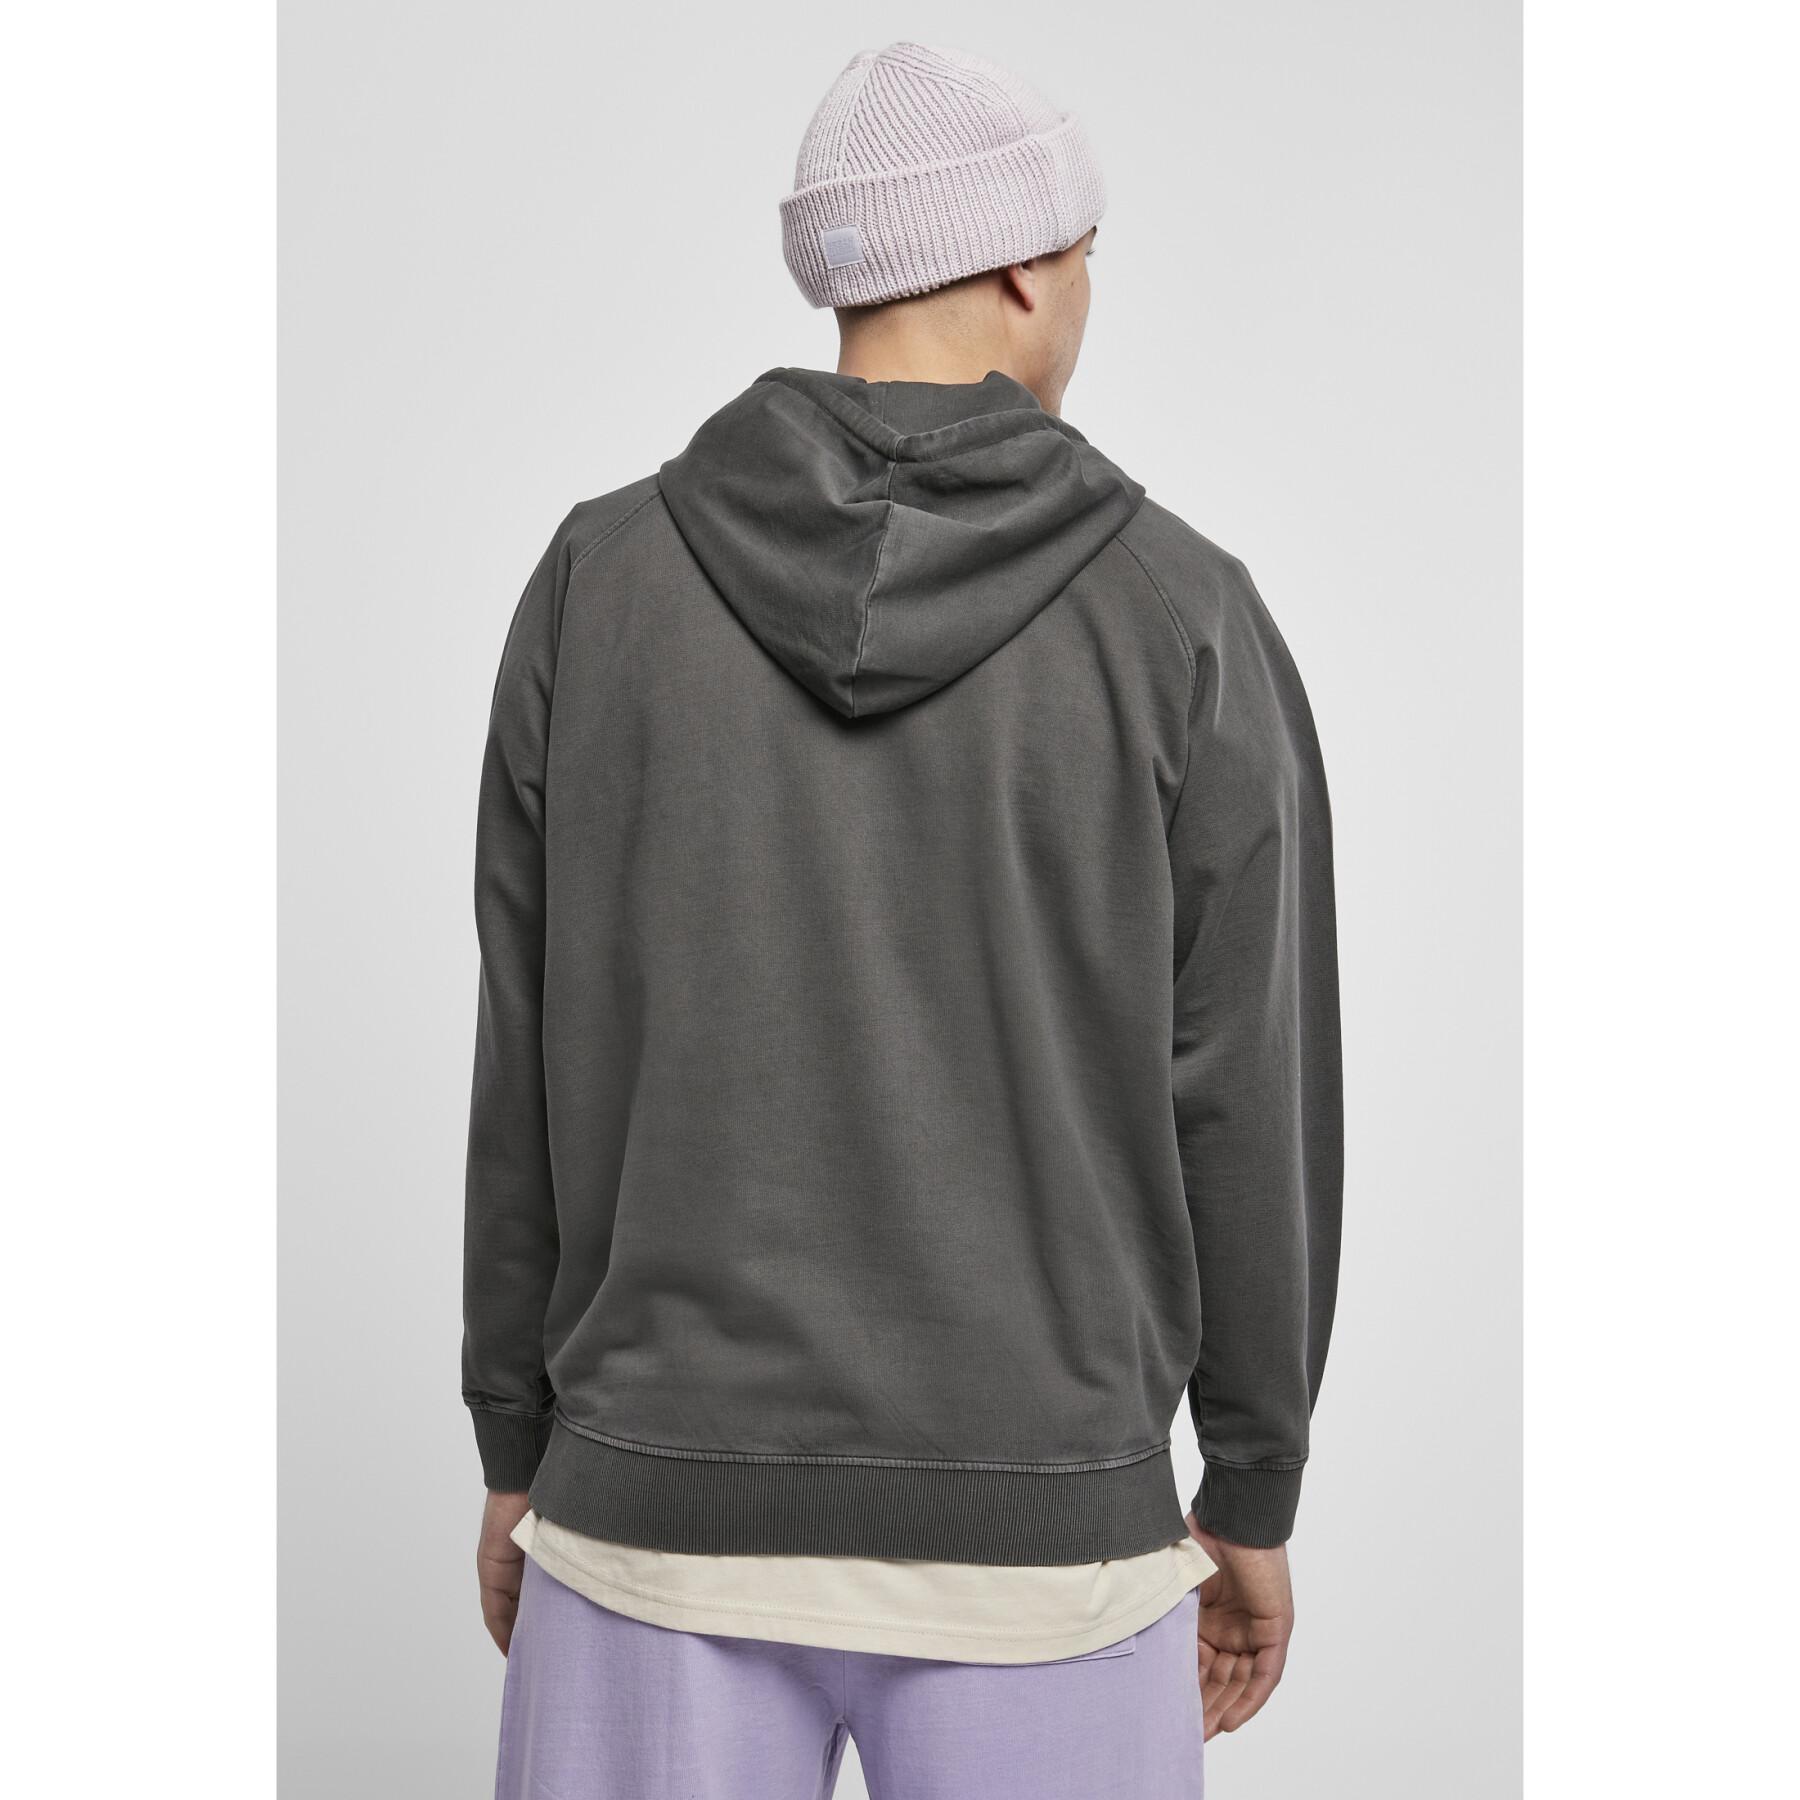 Hooded sweatshirt Urban Classics overdyed